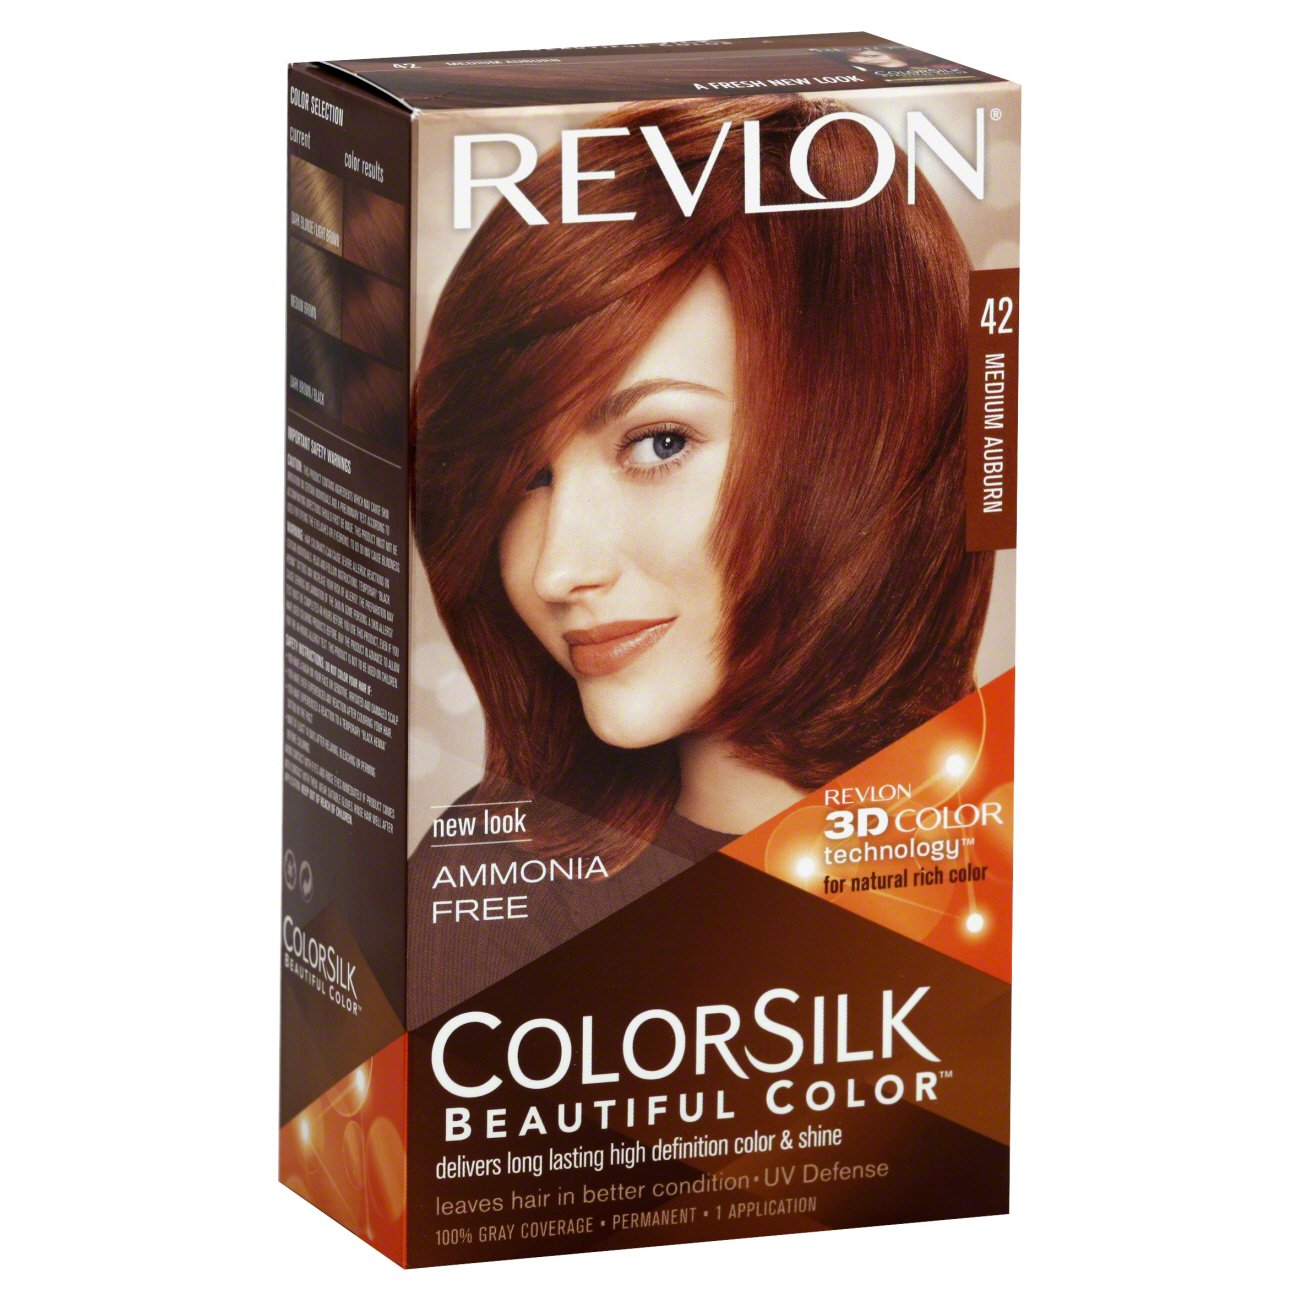 Revlon Colorsilk Beautiful Color 42 Medium Auburn Shop Hair Color At H E B